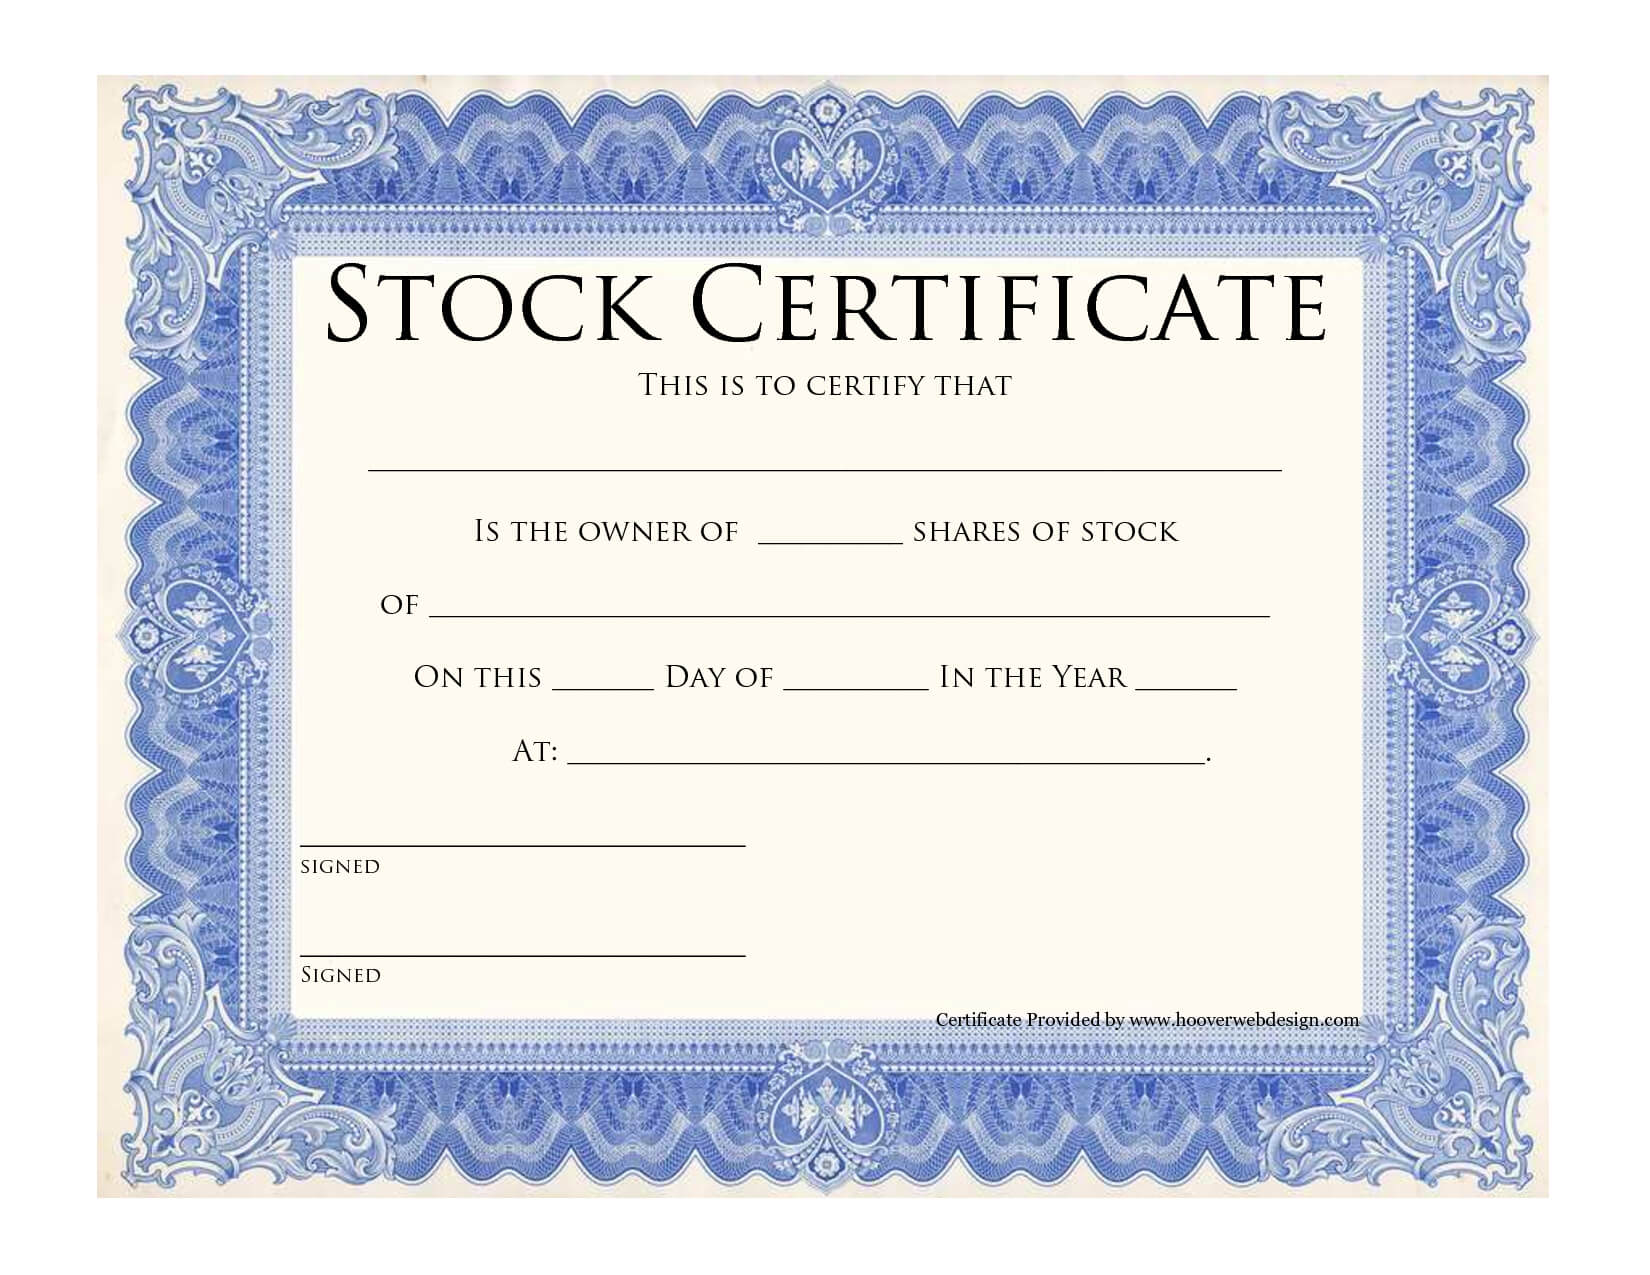 Blank Stock Certificate Template | Printable Stock For Corporate Bond Certificate Template